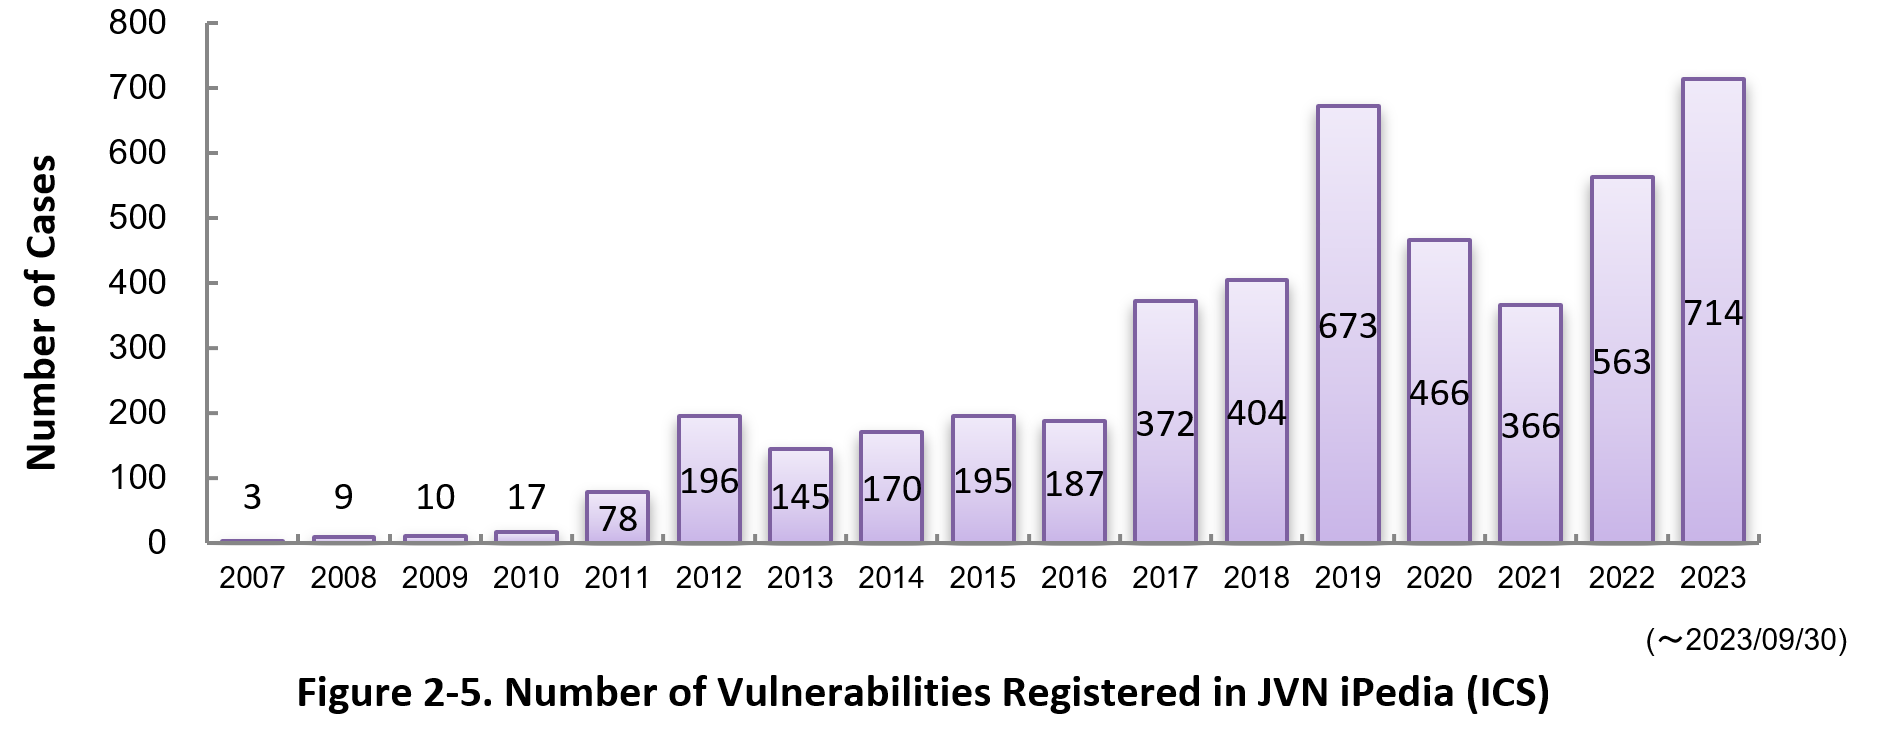 Figure 2-5. Number of Vulnerabilities Registered to JVN iPedia (ICS)